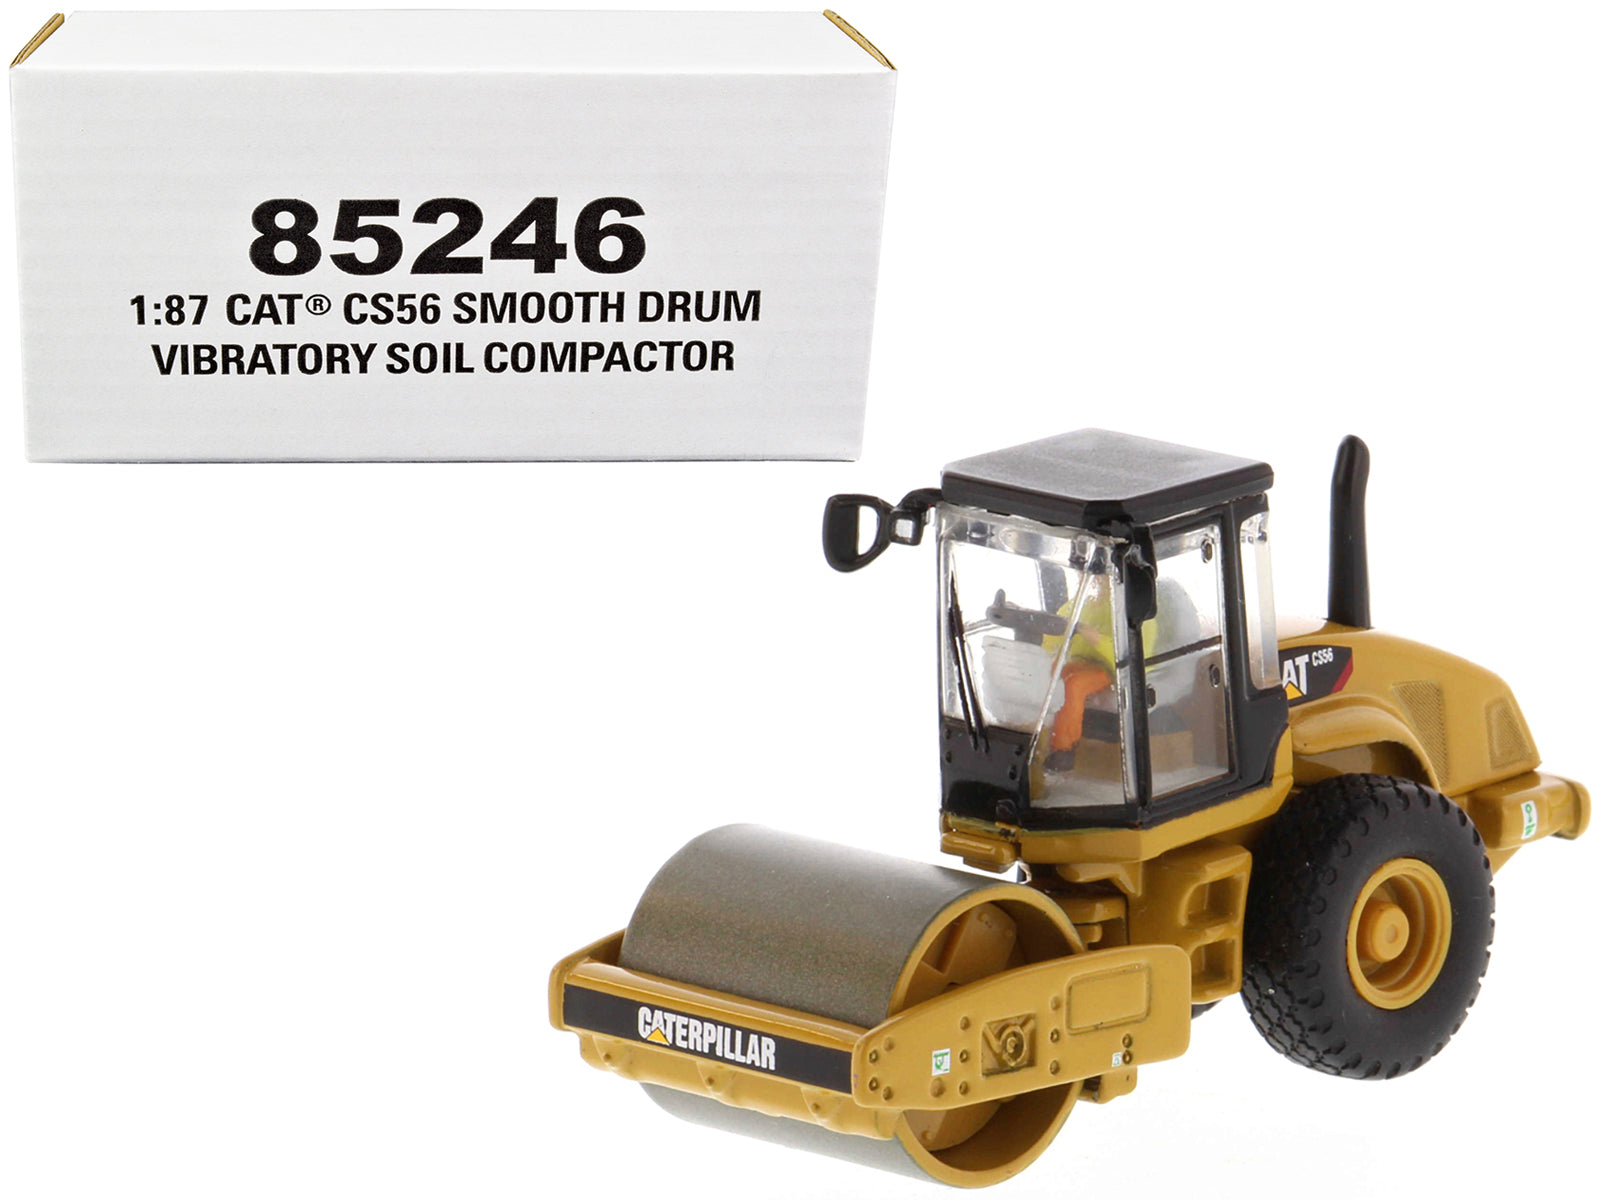 CAT Caterpillar CS56 Smooth Drum Vibratory Soil Compactor with Operator 